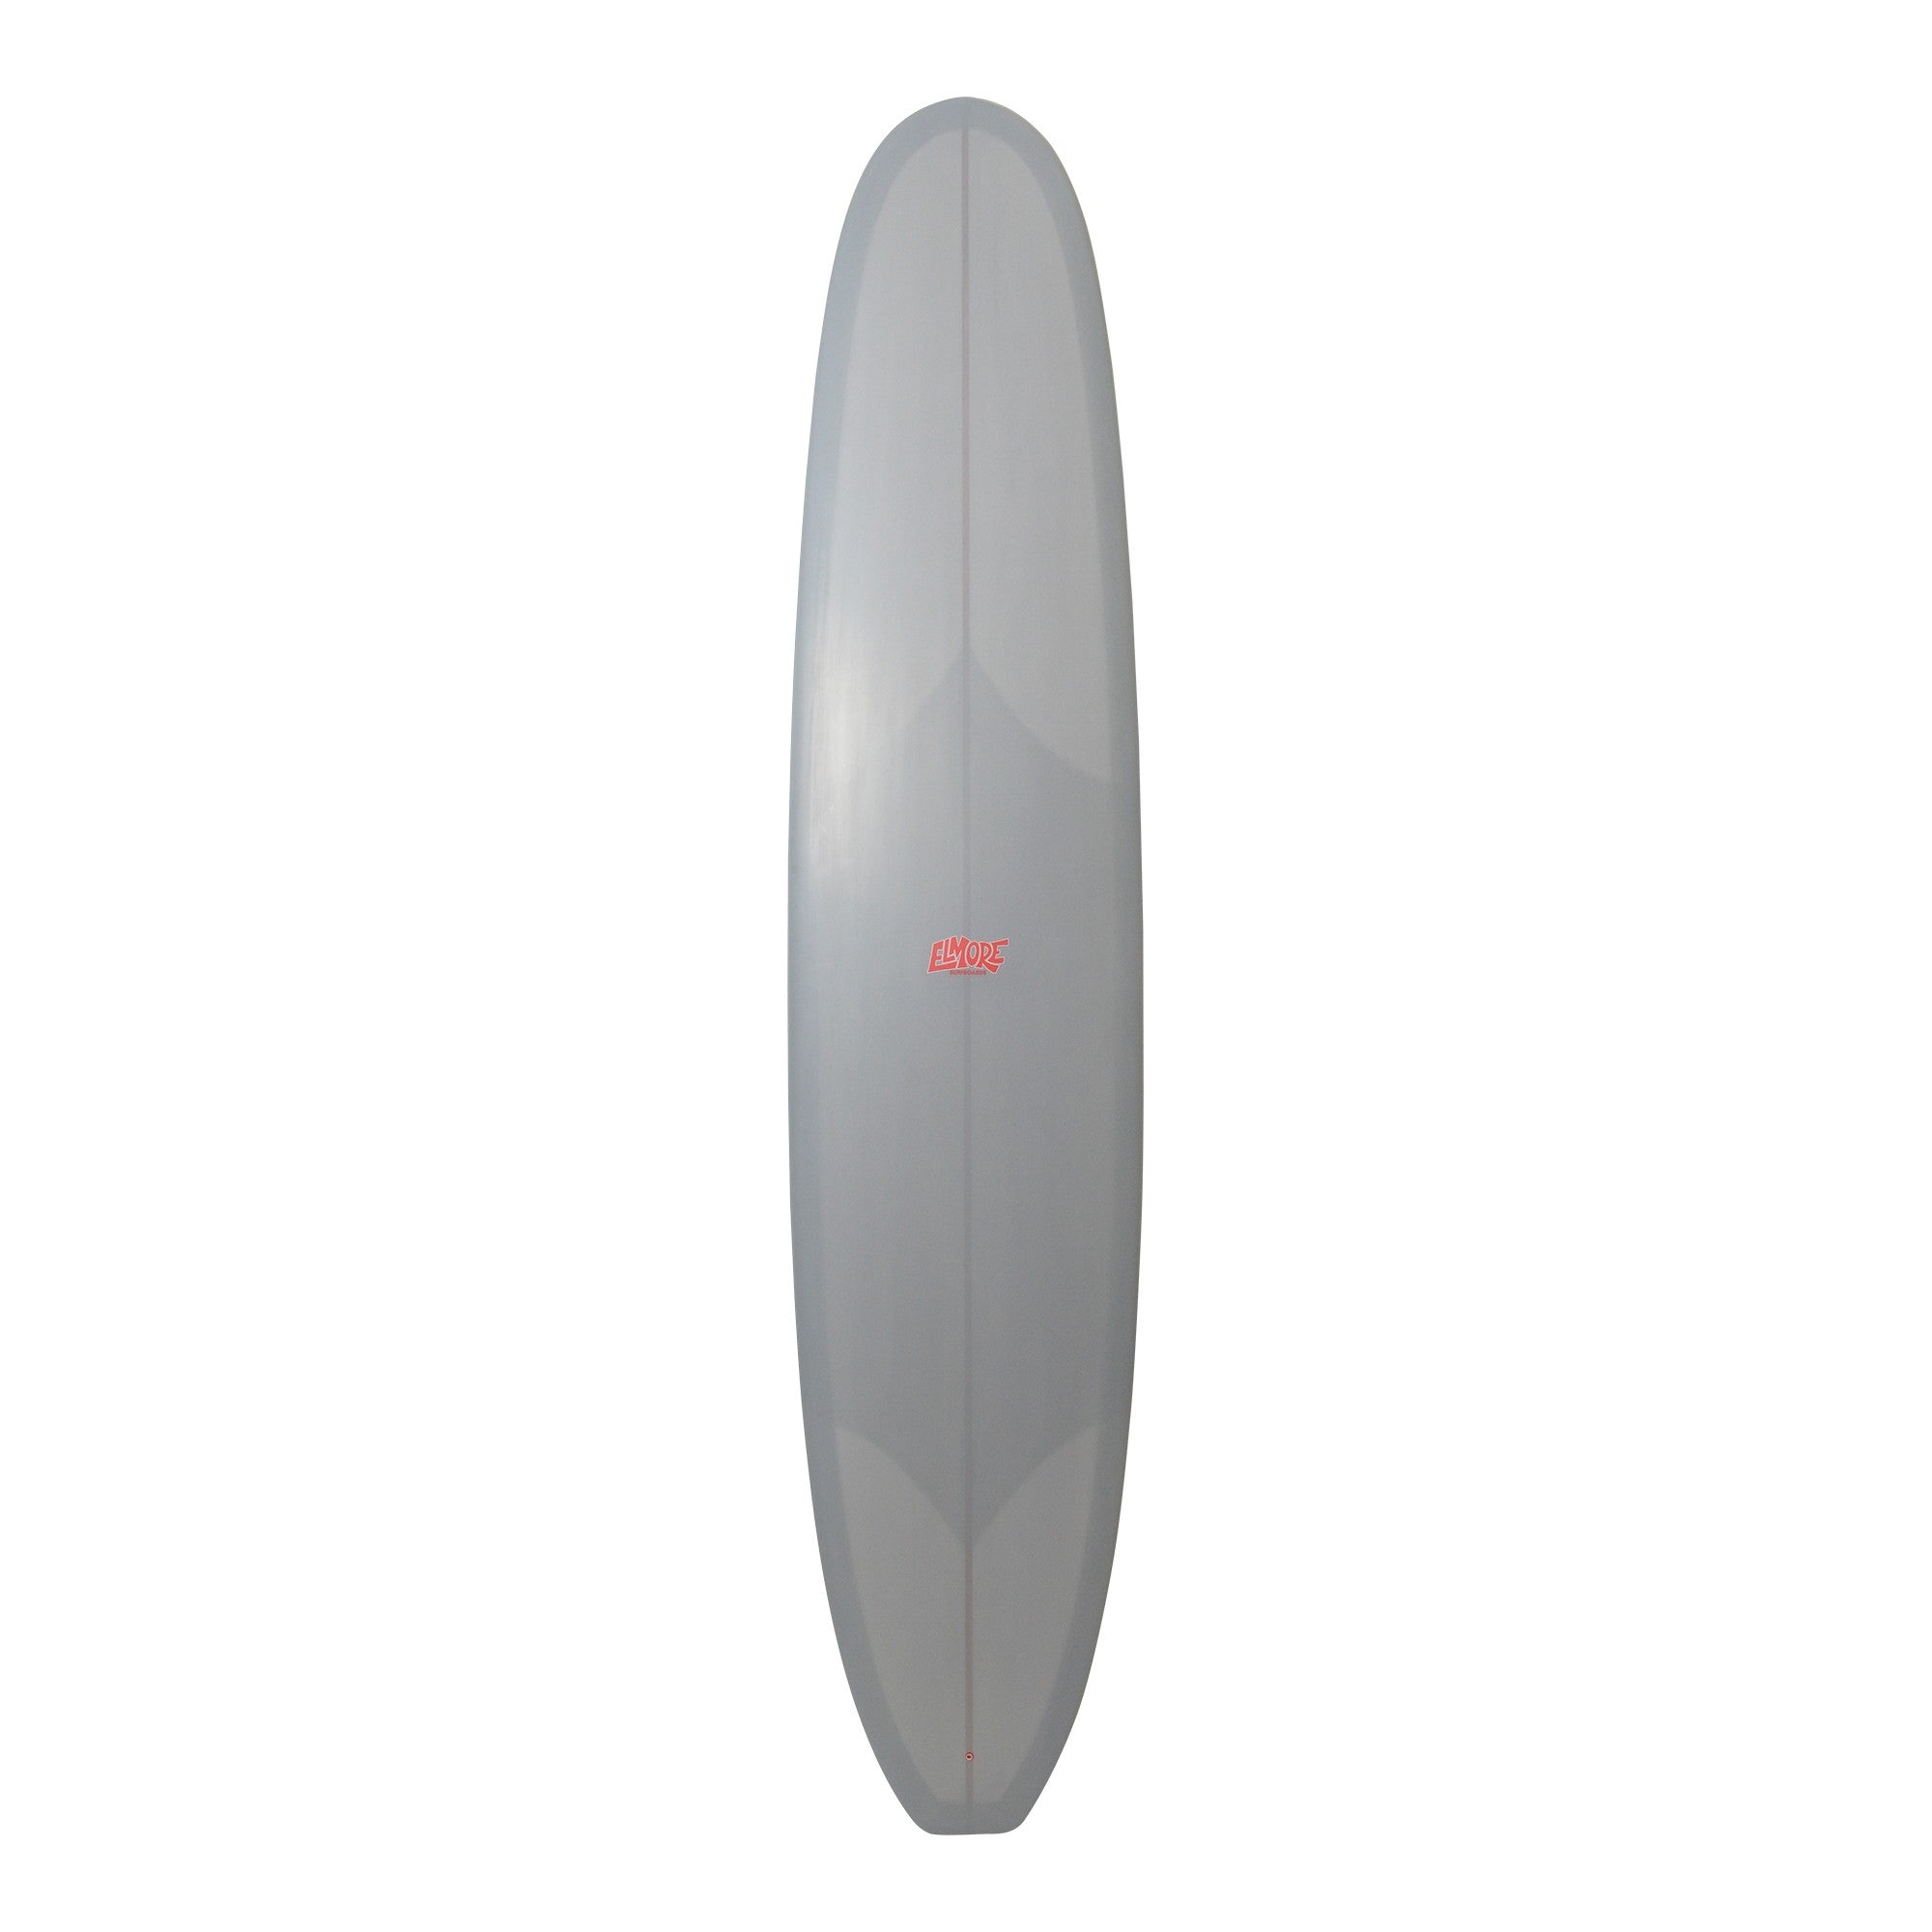 ELMORE SURFBOARDS - Longboard Sam's Club - 9'2 (PU) - Gris